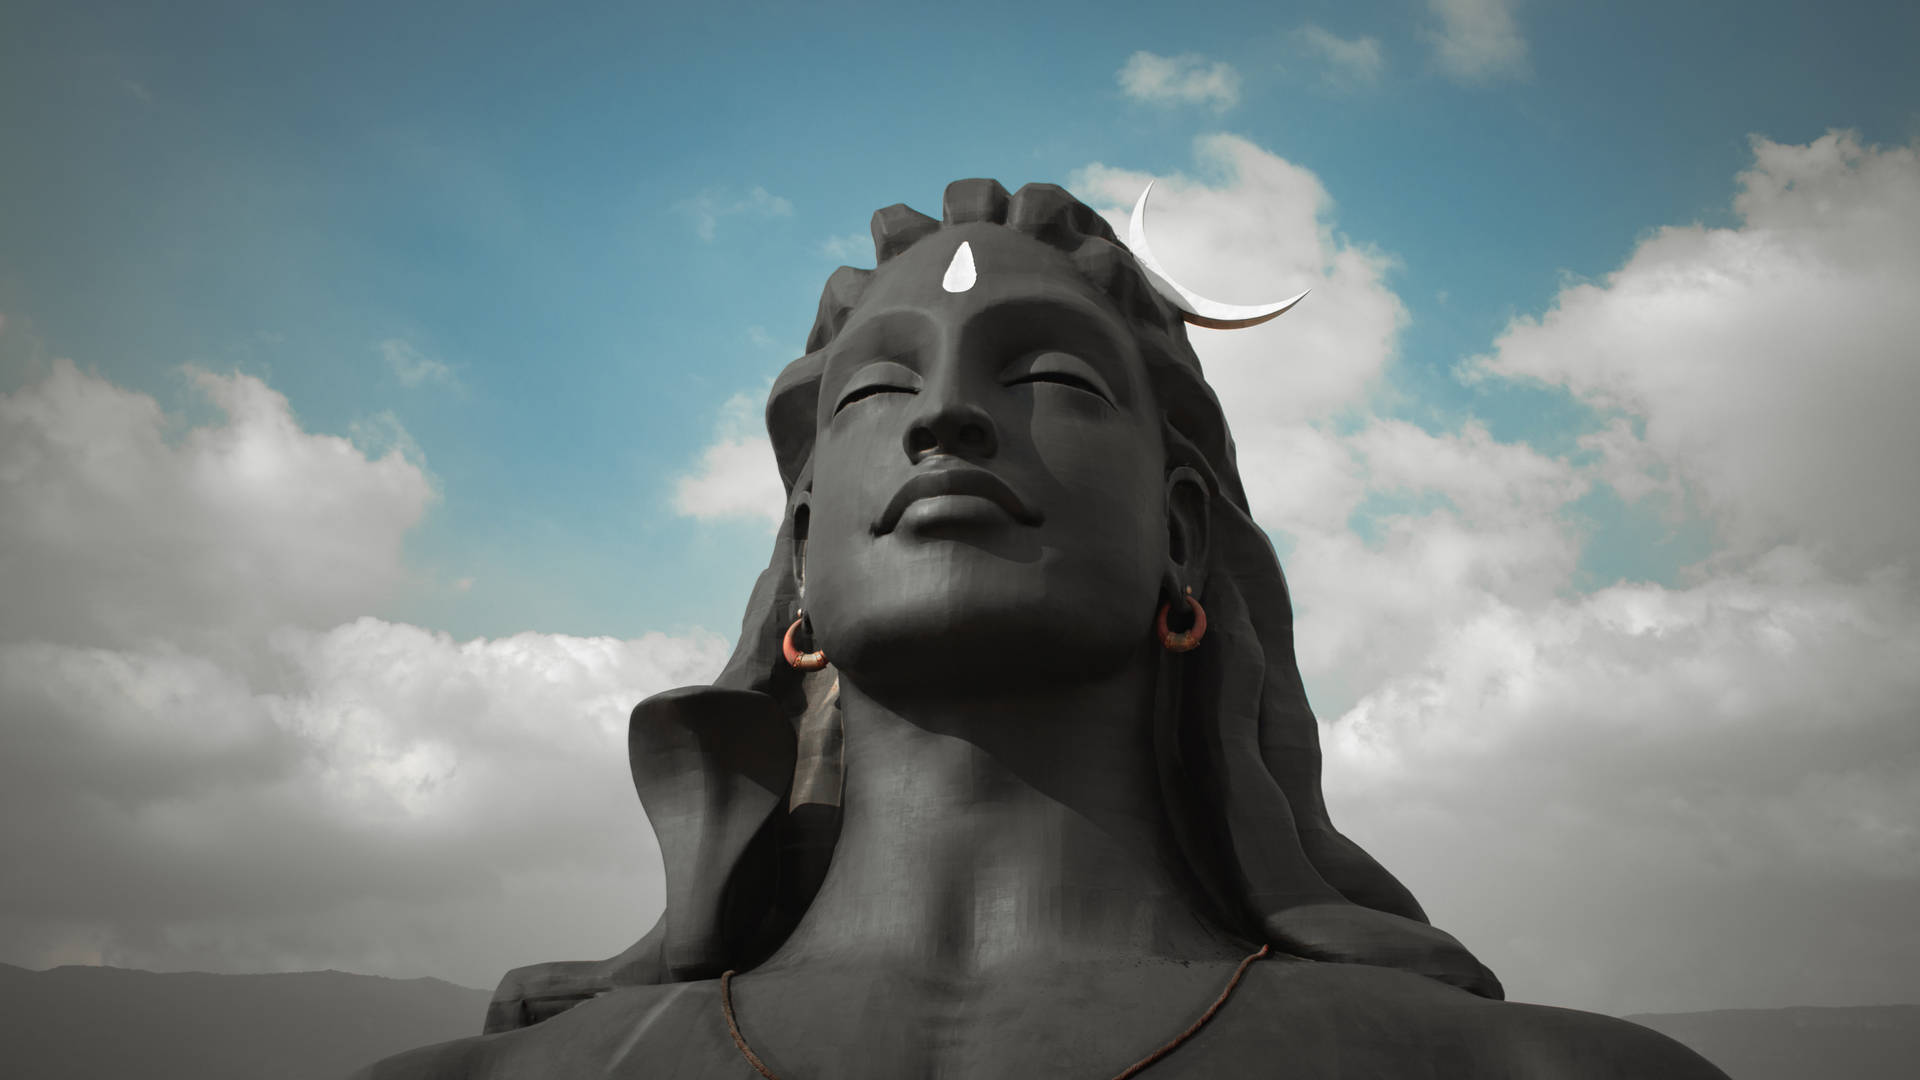 Ladda ner Adiyogishiva-statyn I Coimbatore. Wallpaper | Wallpapers.com